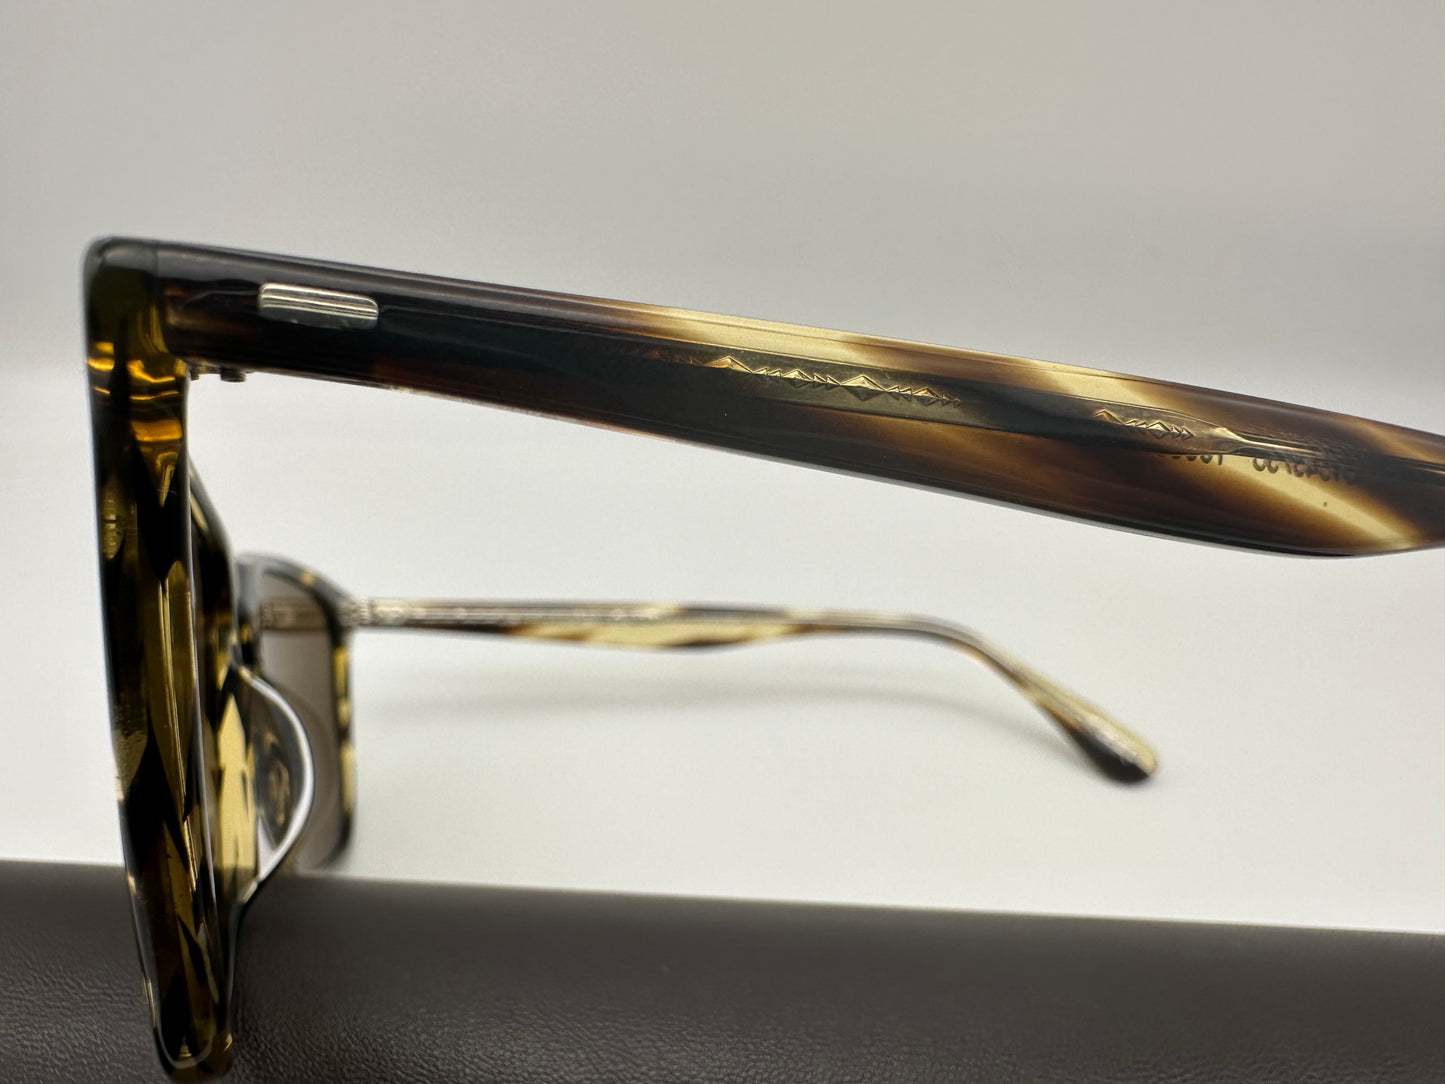 Oliver Peoples Ollis Sun 54mm OV 5437SU Cocobolo/True Brown Polarized 1003/57 made in Italy Sunglasses